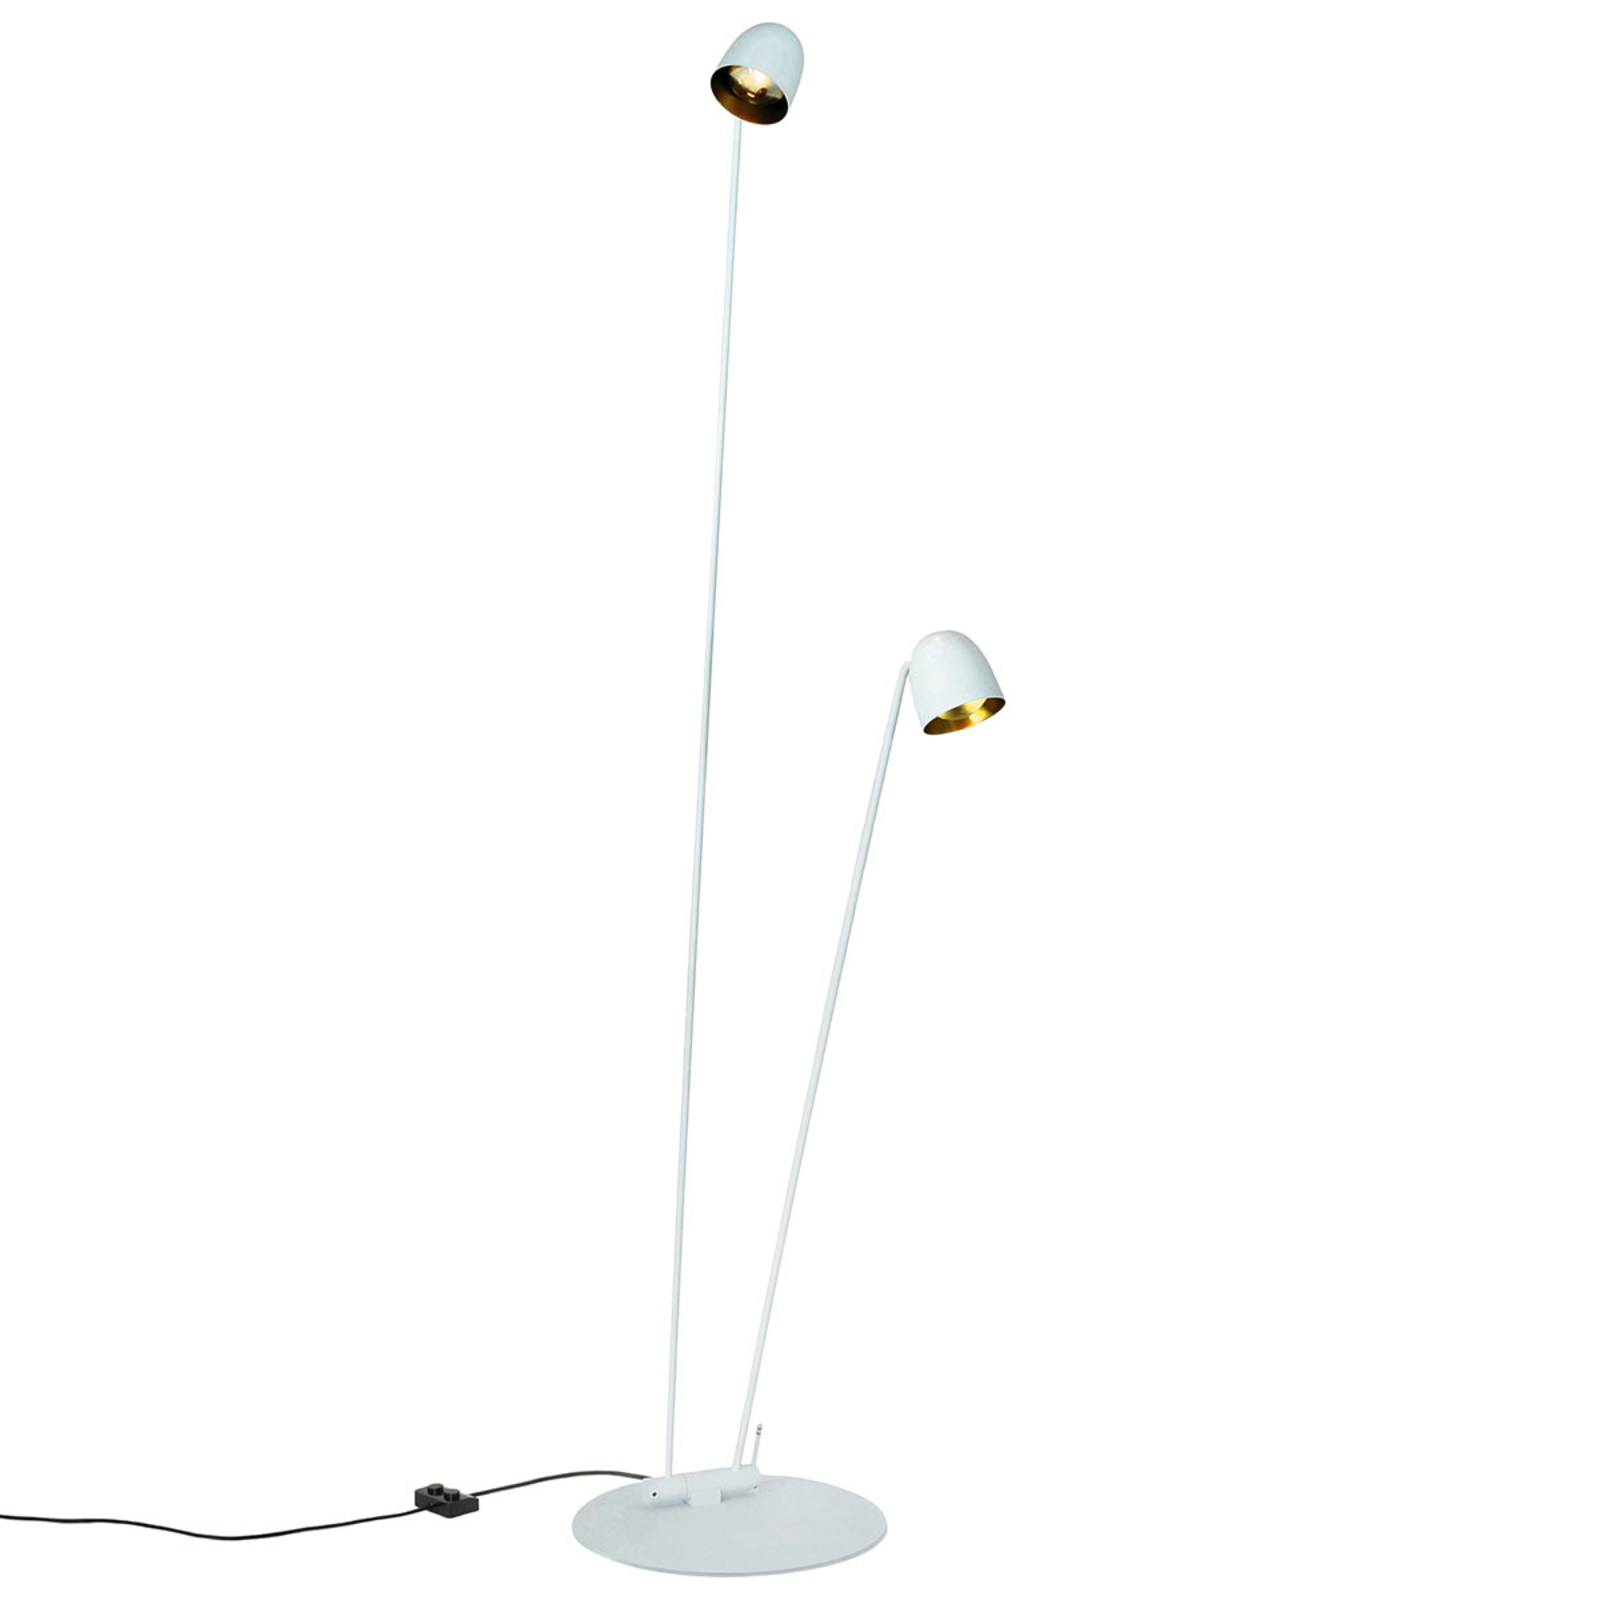 Flexibilná stojaca LED lampa Speers F biela